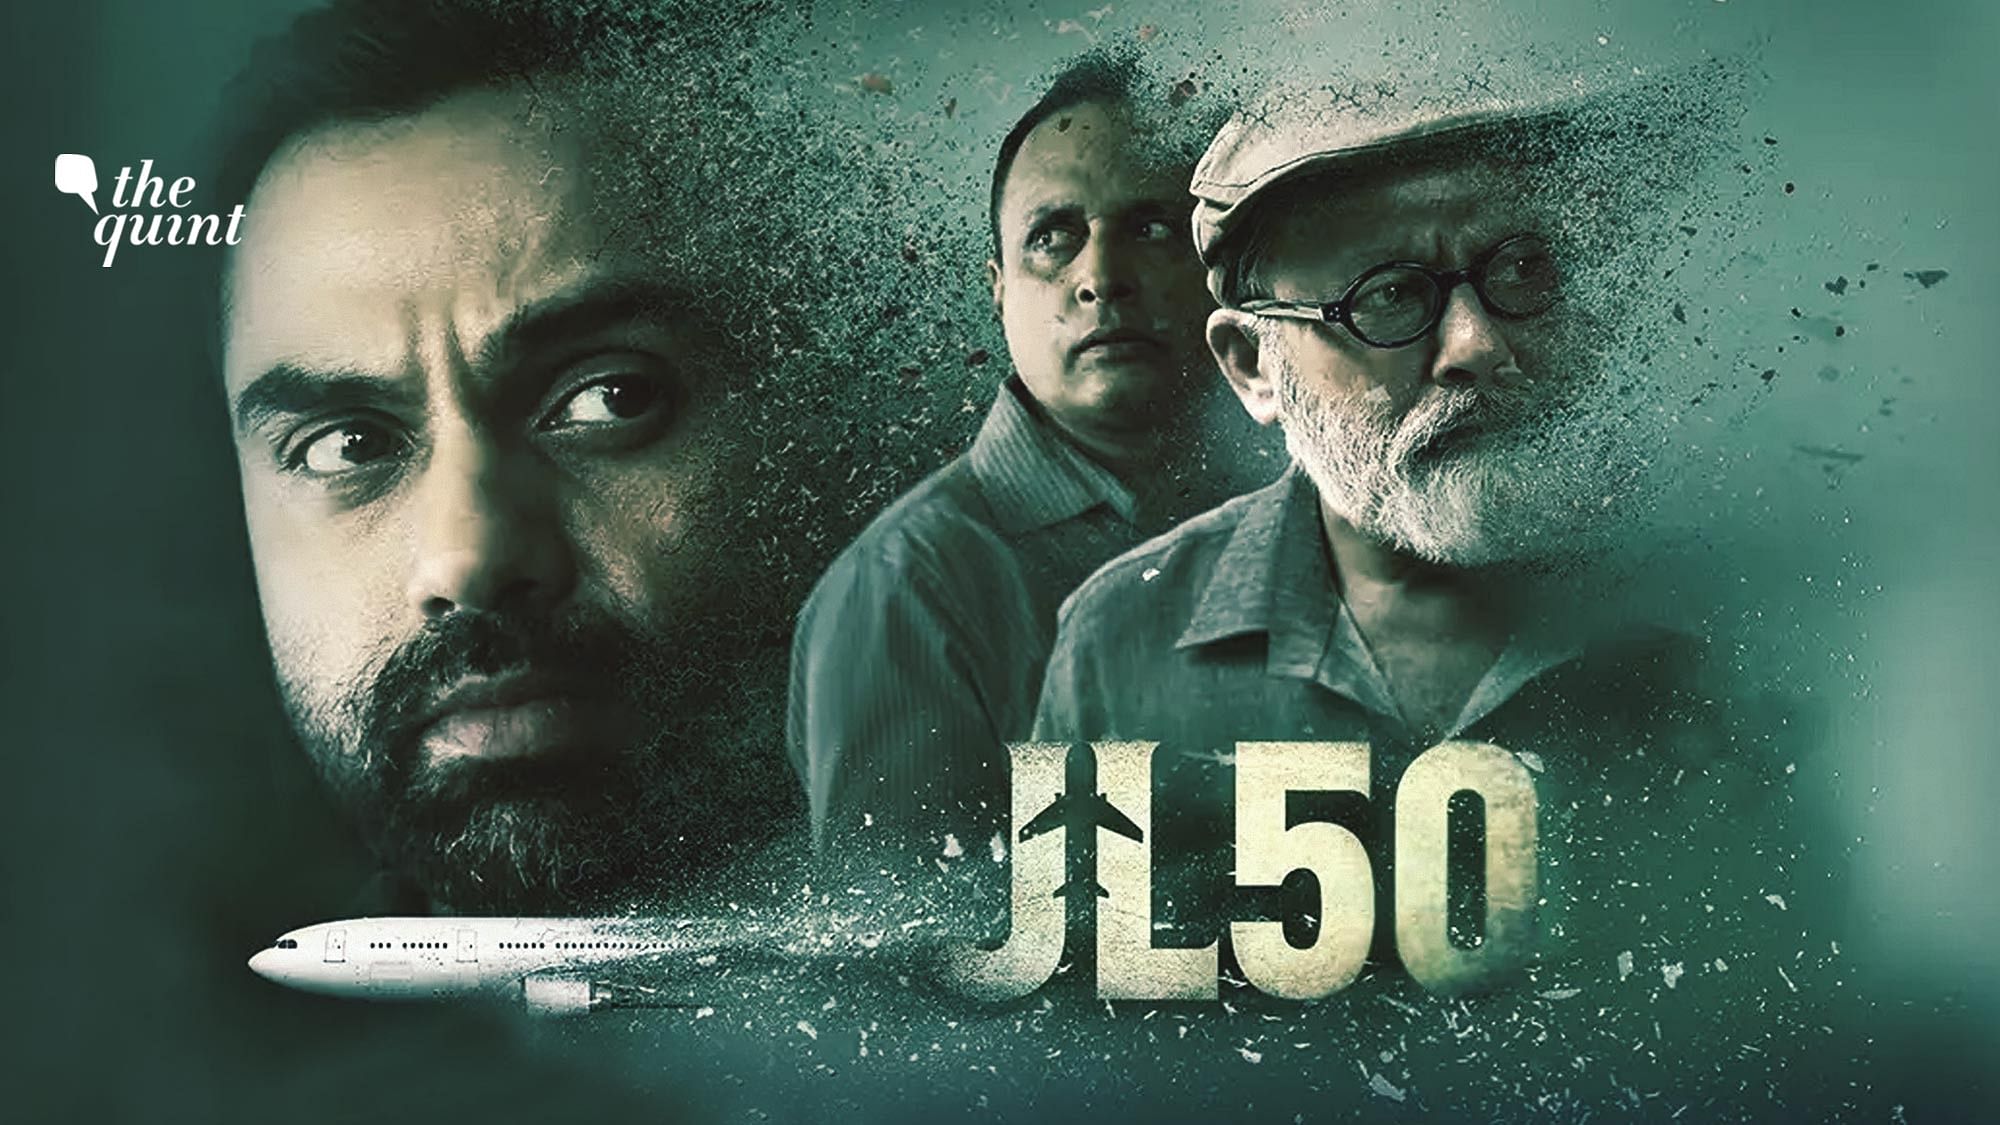 'JL 50' stars Abhay Deol and Pankaj Kapur in the lead.